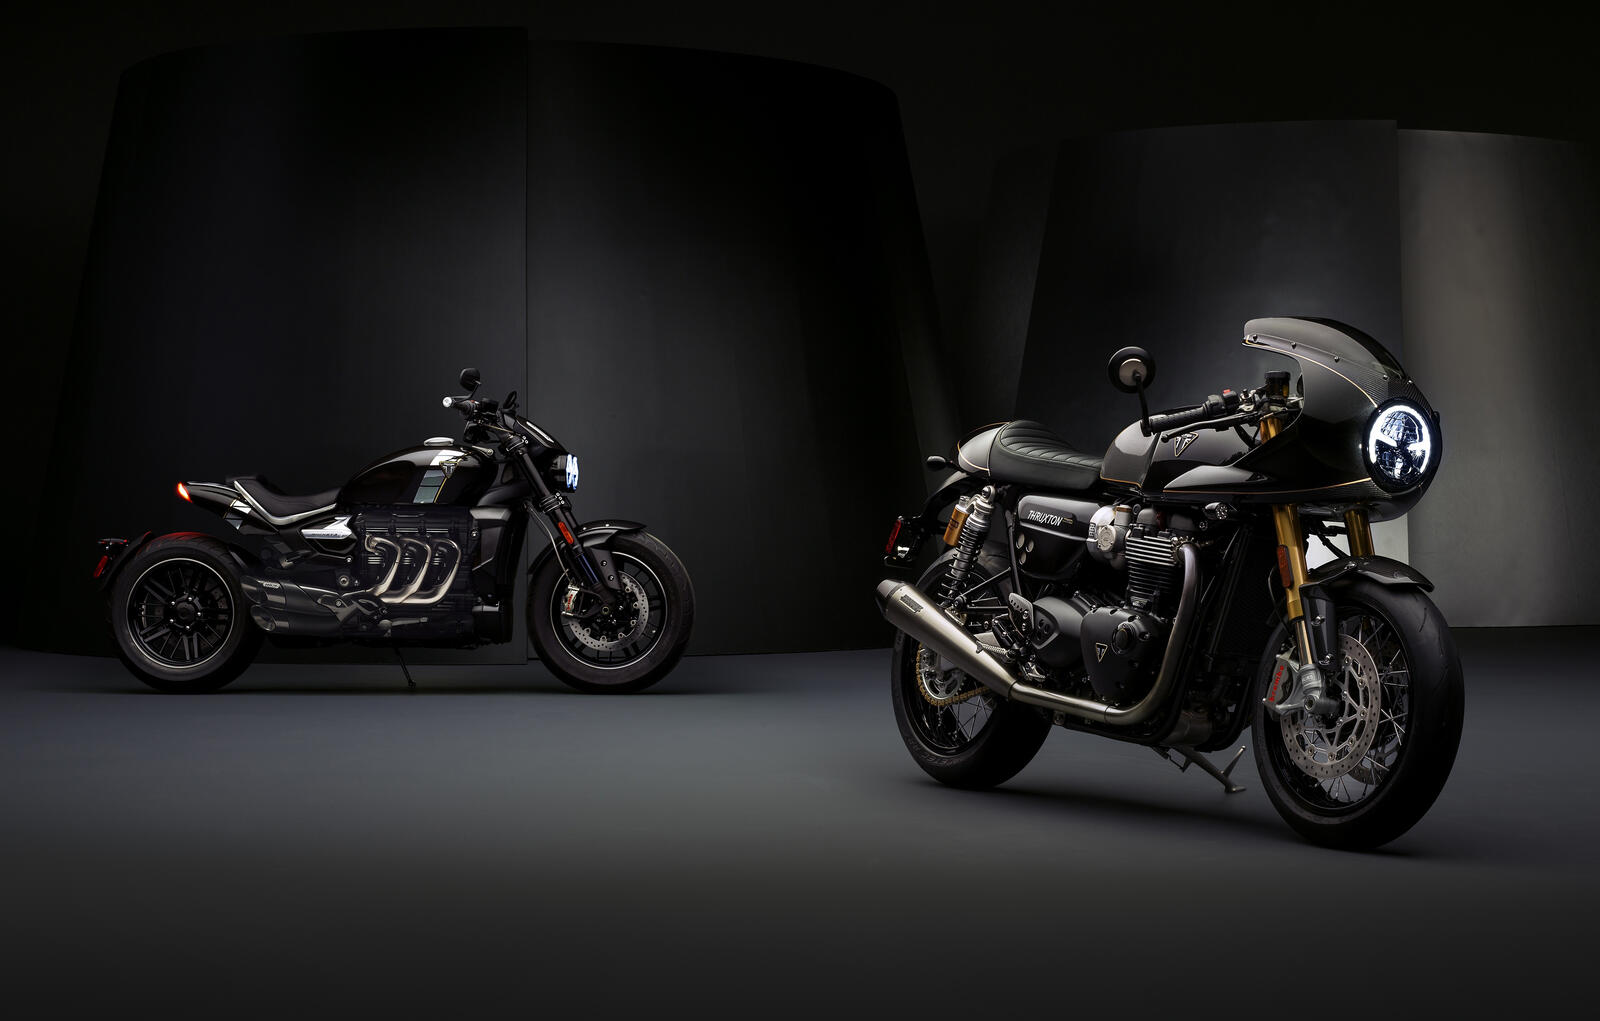 Free photo Two black motorcycles in a dark garage